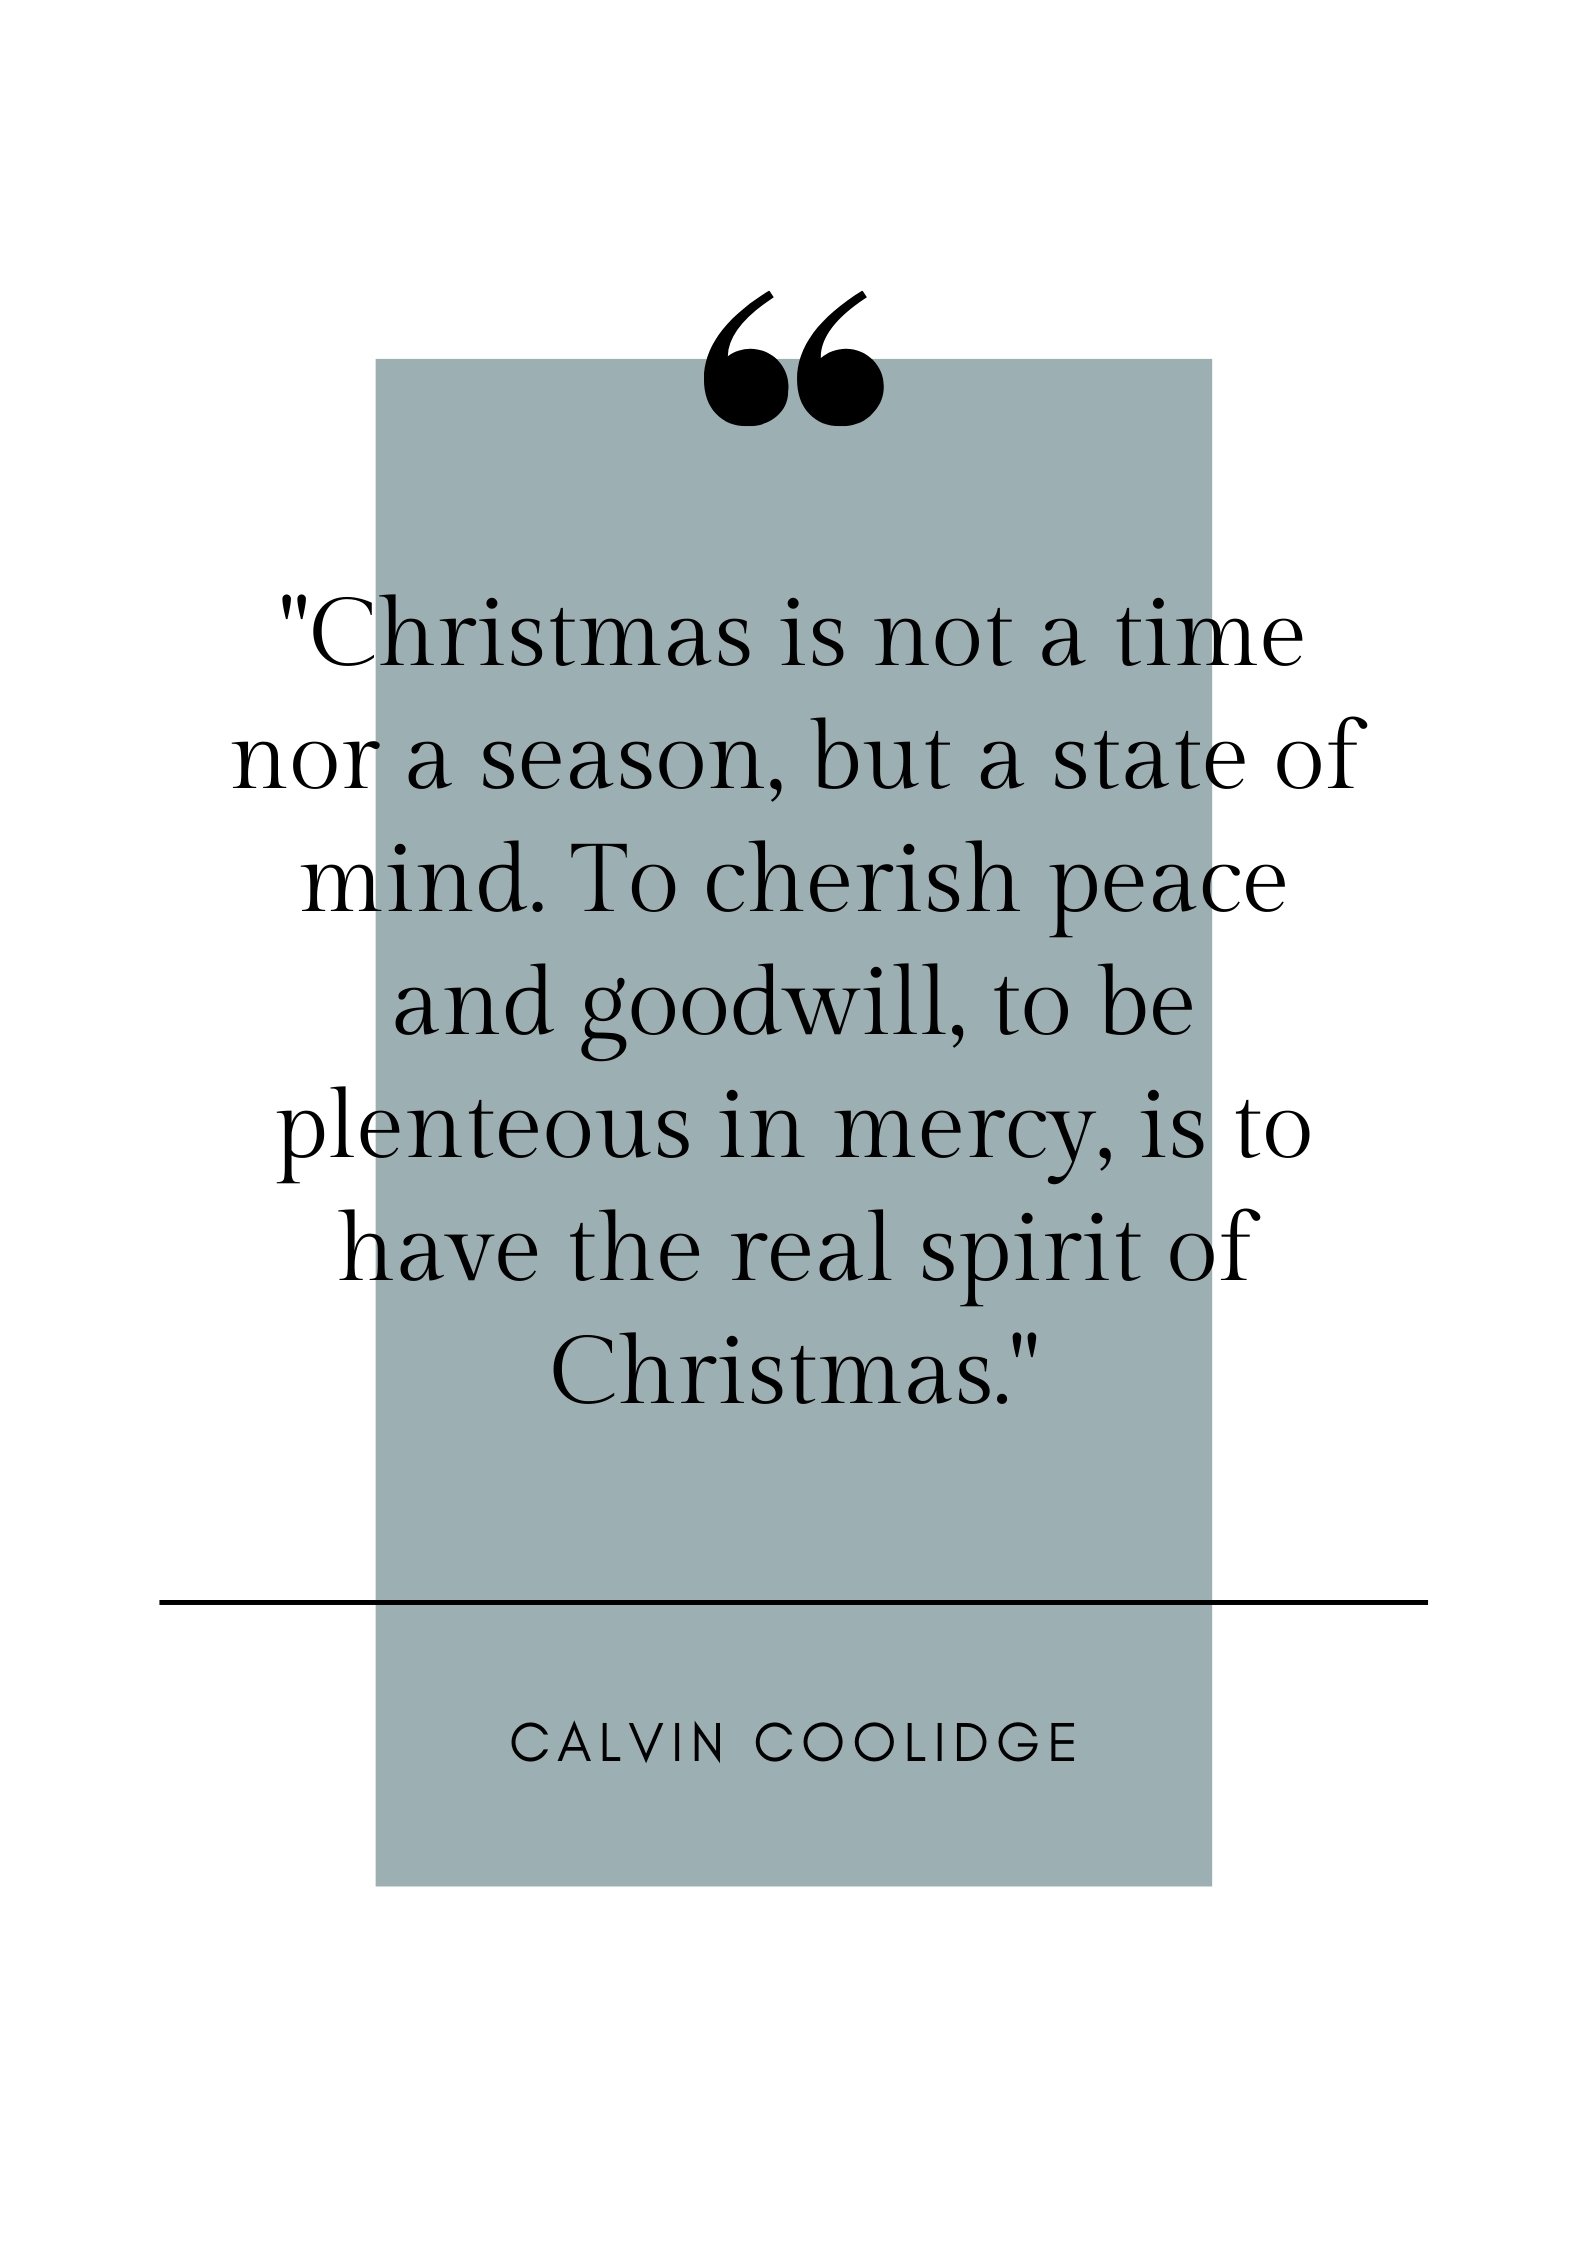 calvin coolidge christmas quote